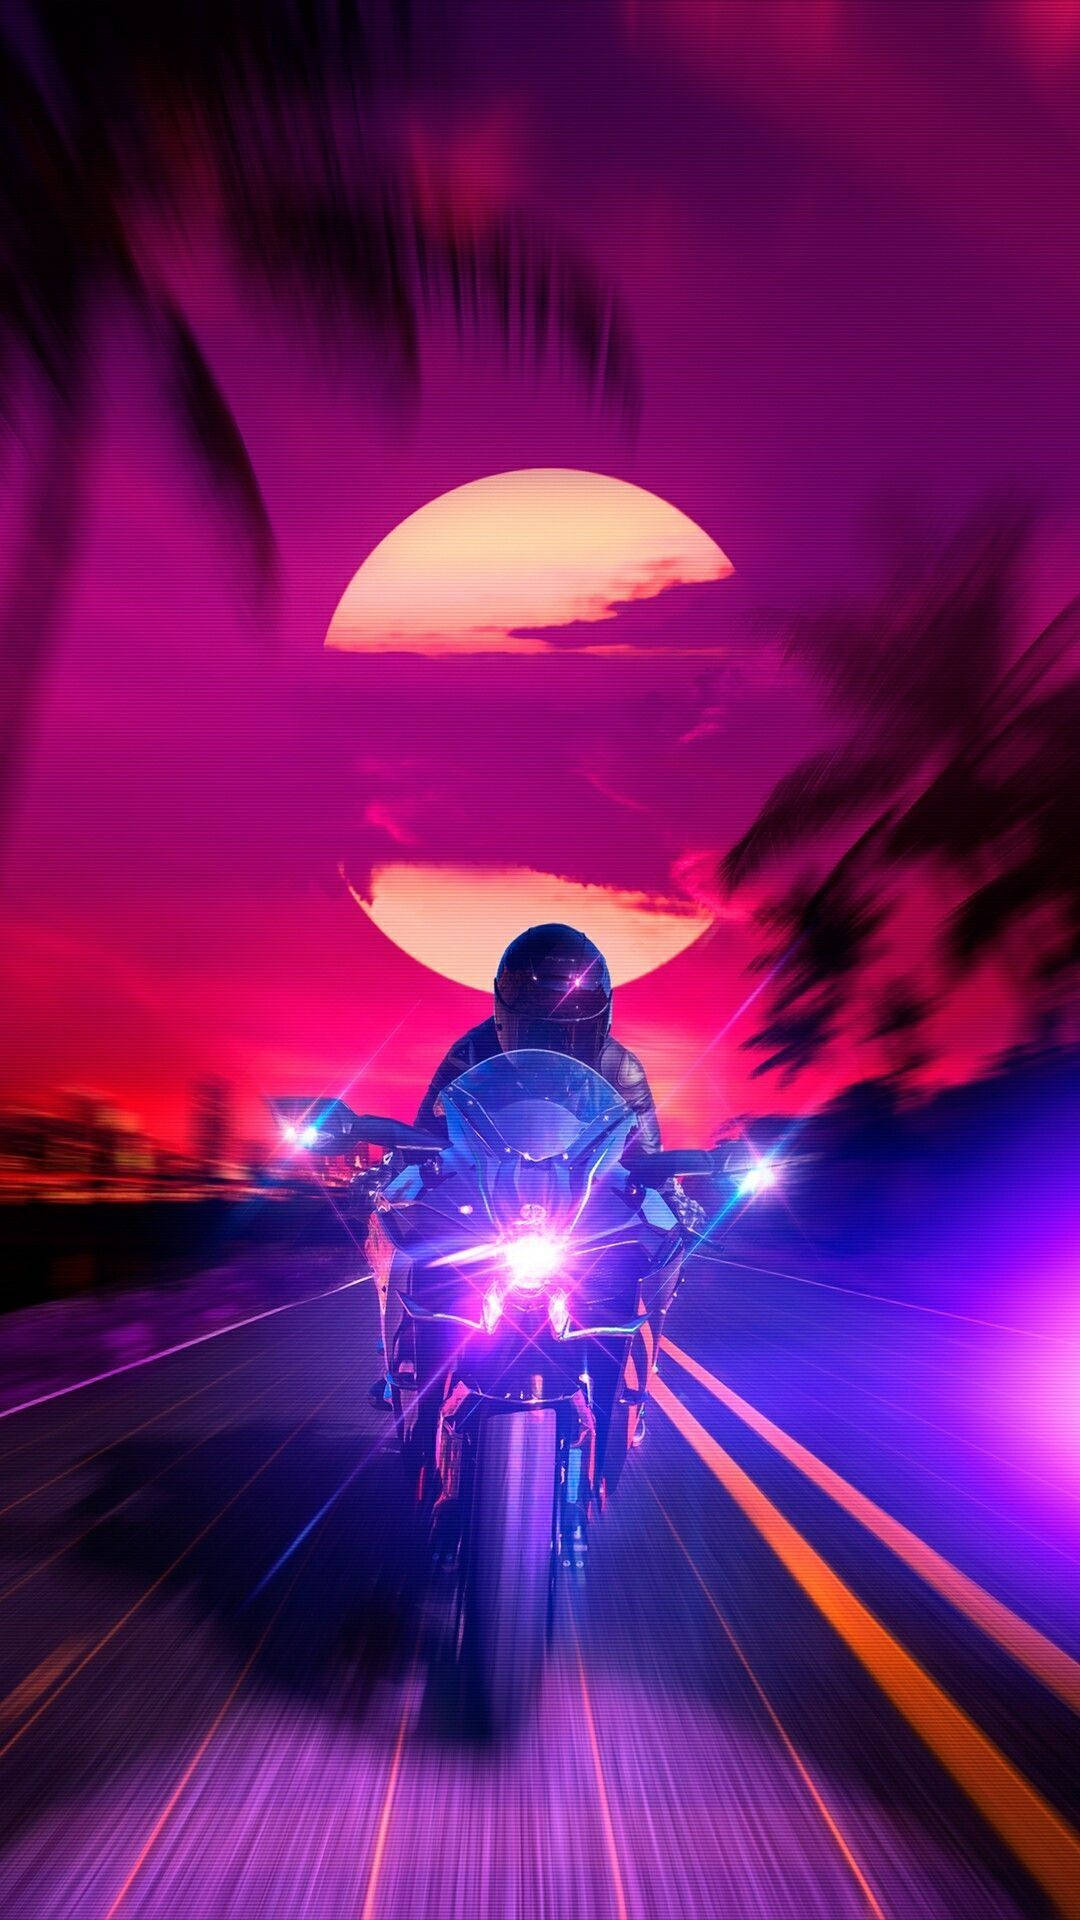 Aesthetic Retro Motorcycle Rider Background